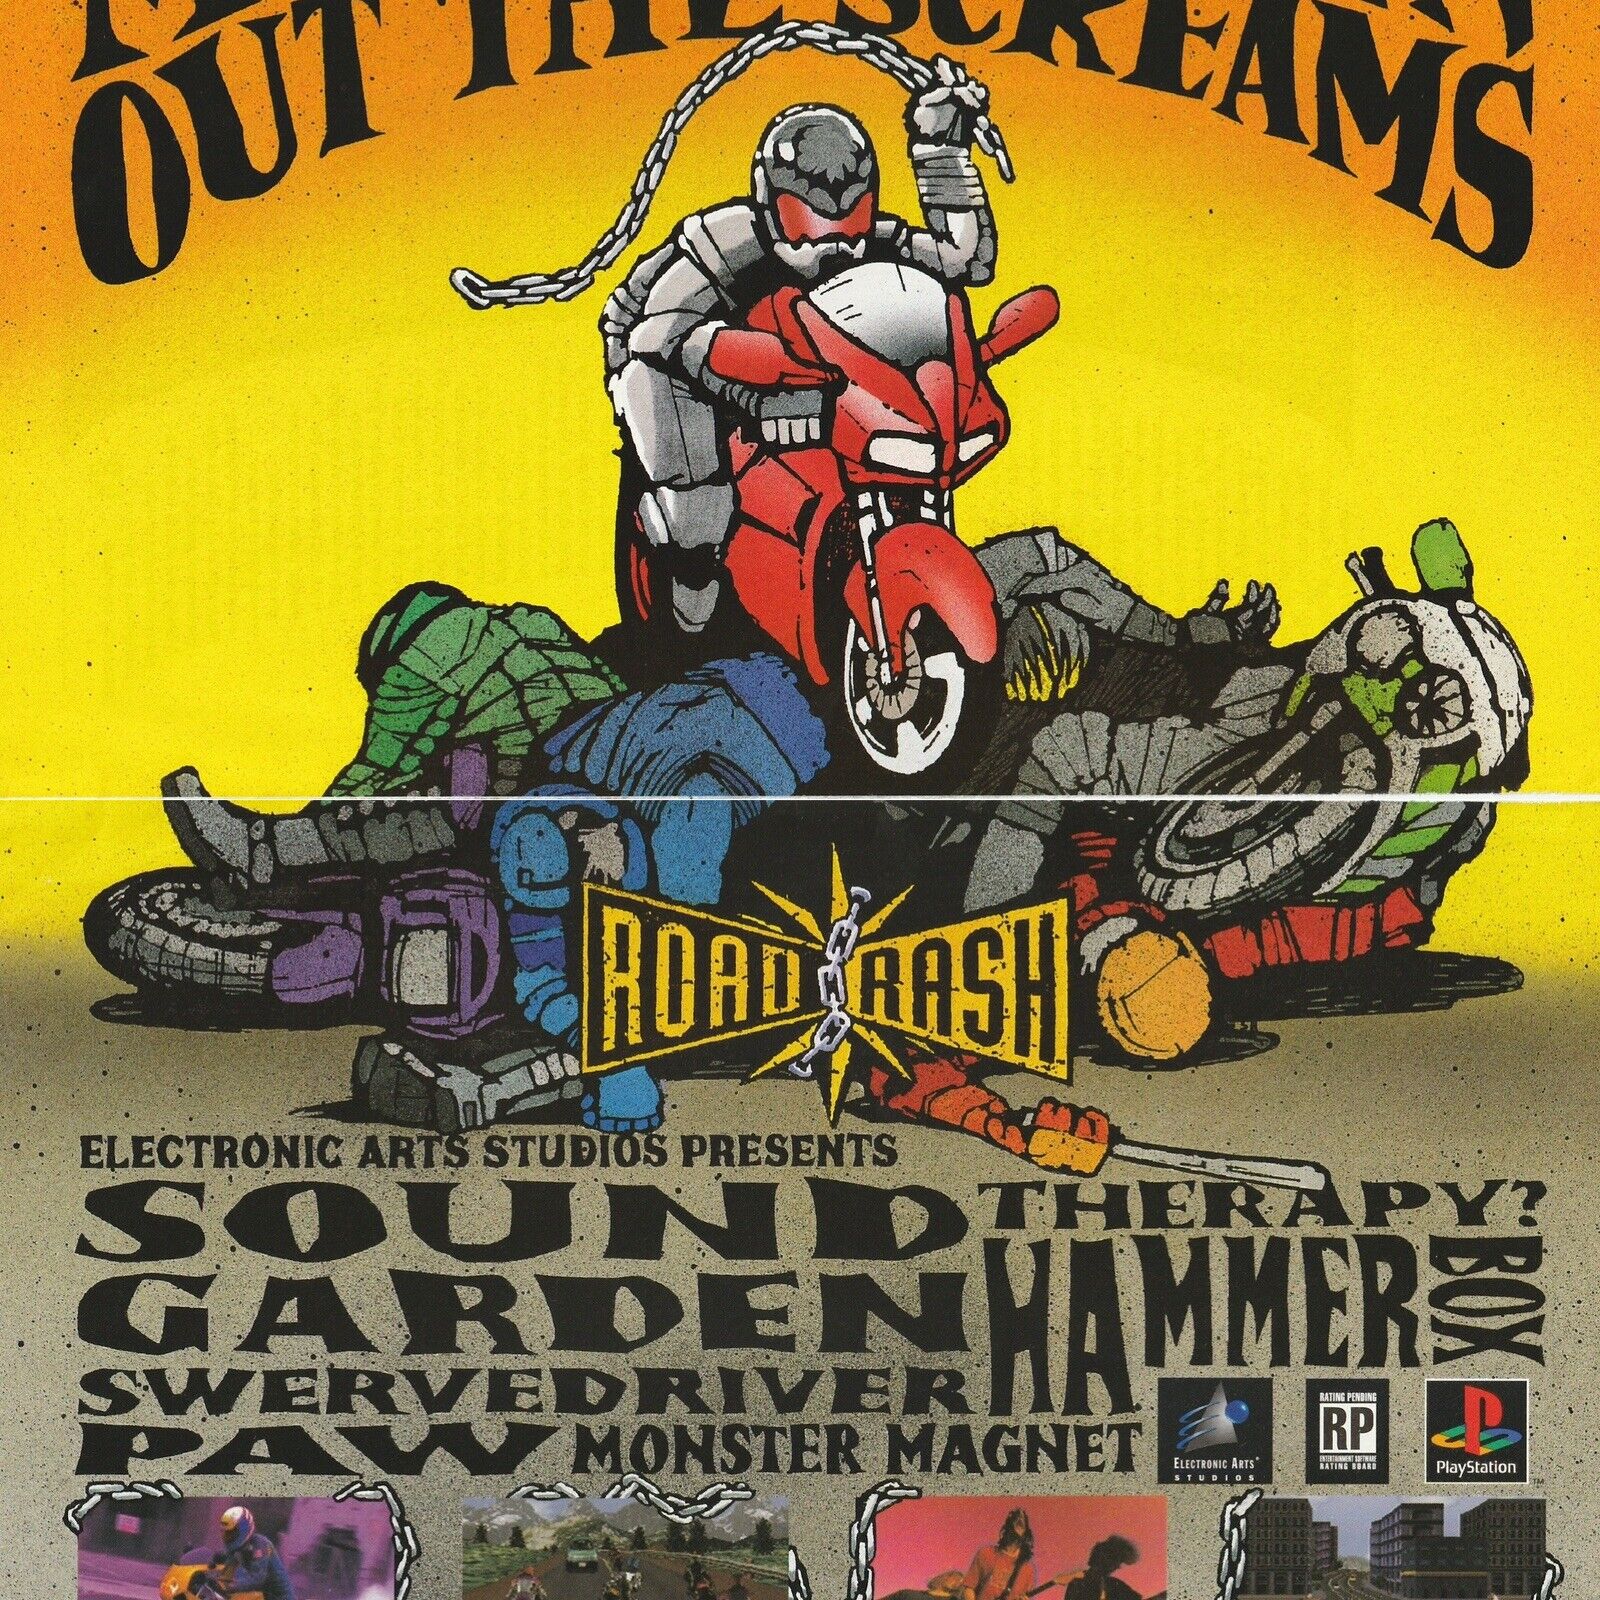 1995 Road Rash Motorcycle PS1 Vintage Gaming 2-Pg Print Ad/Poster 27x42cm NEX11